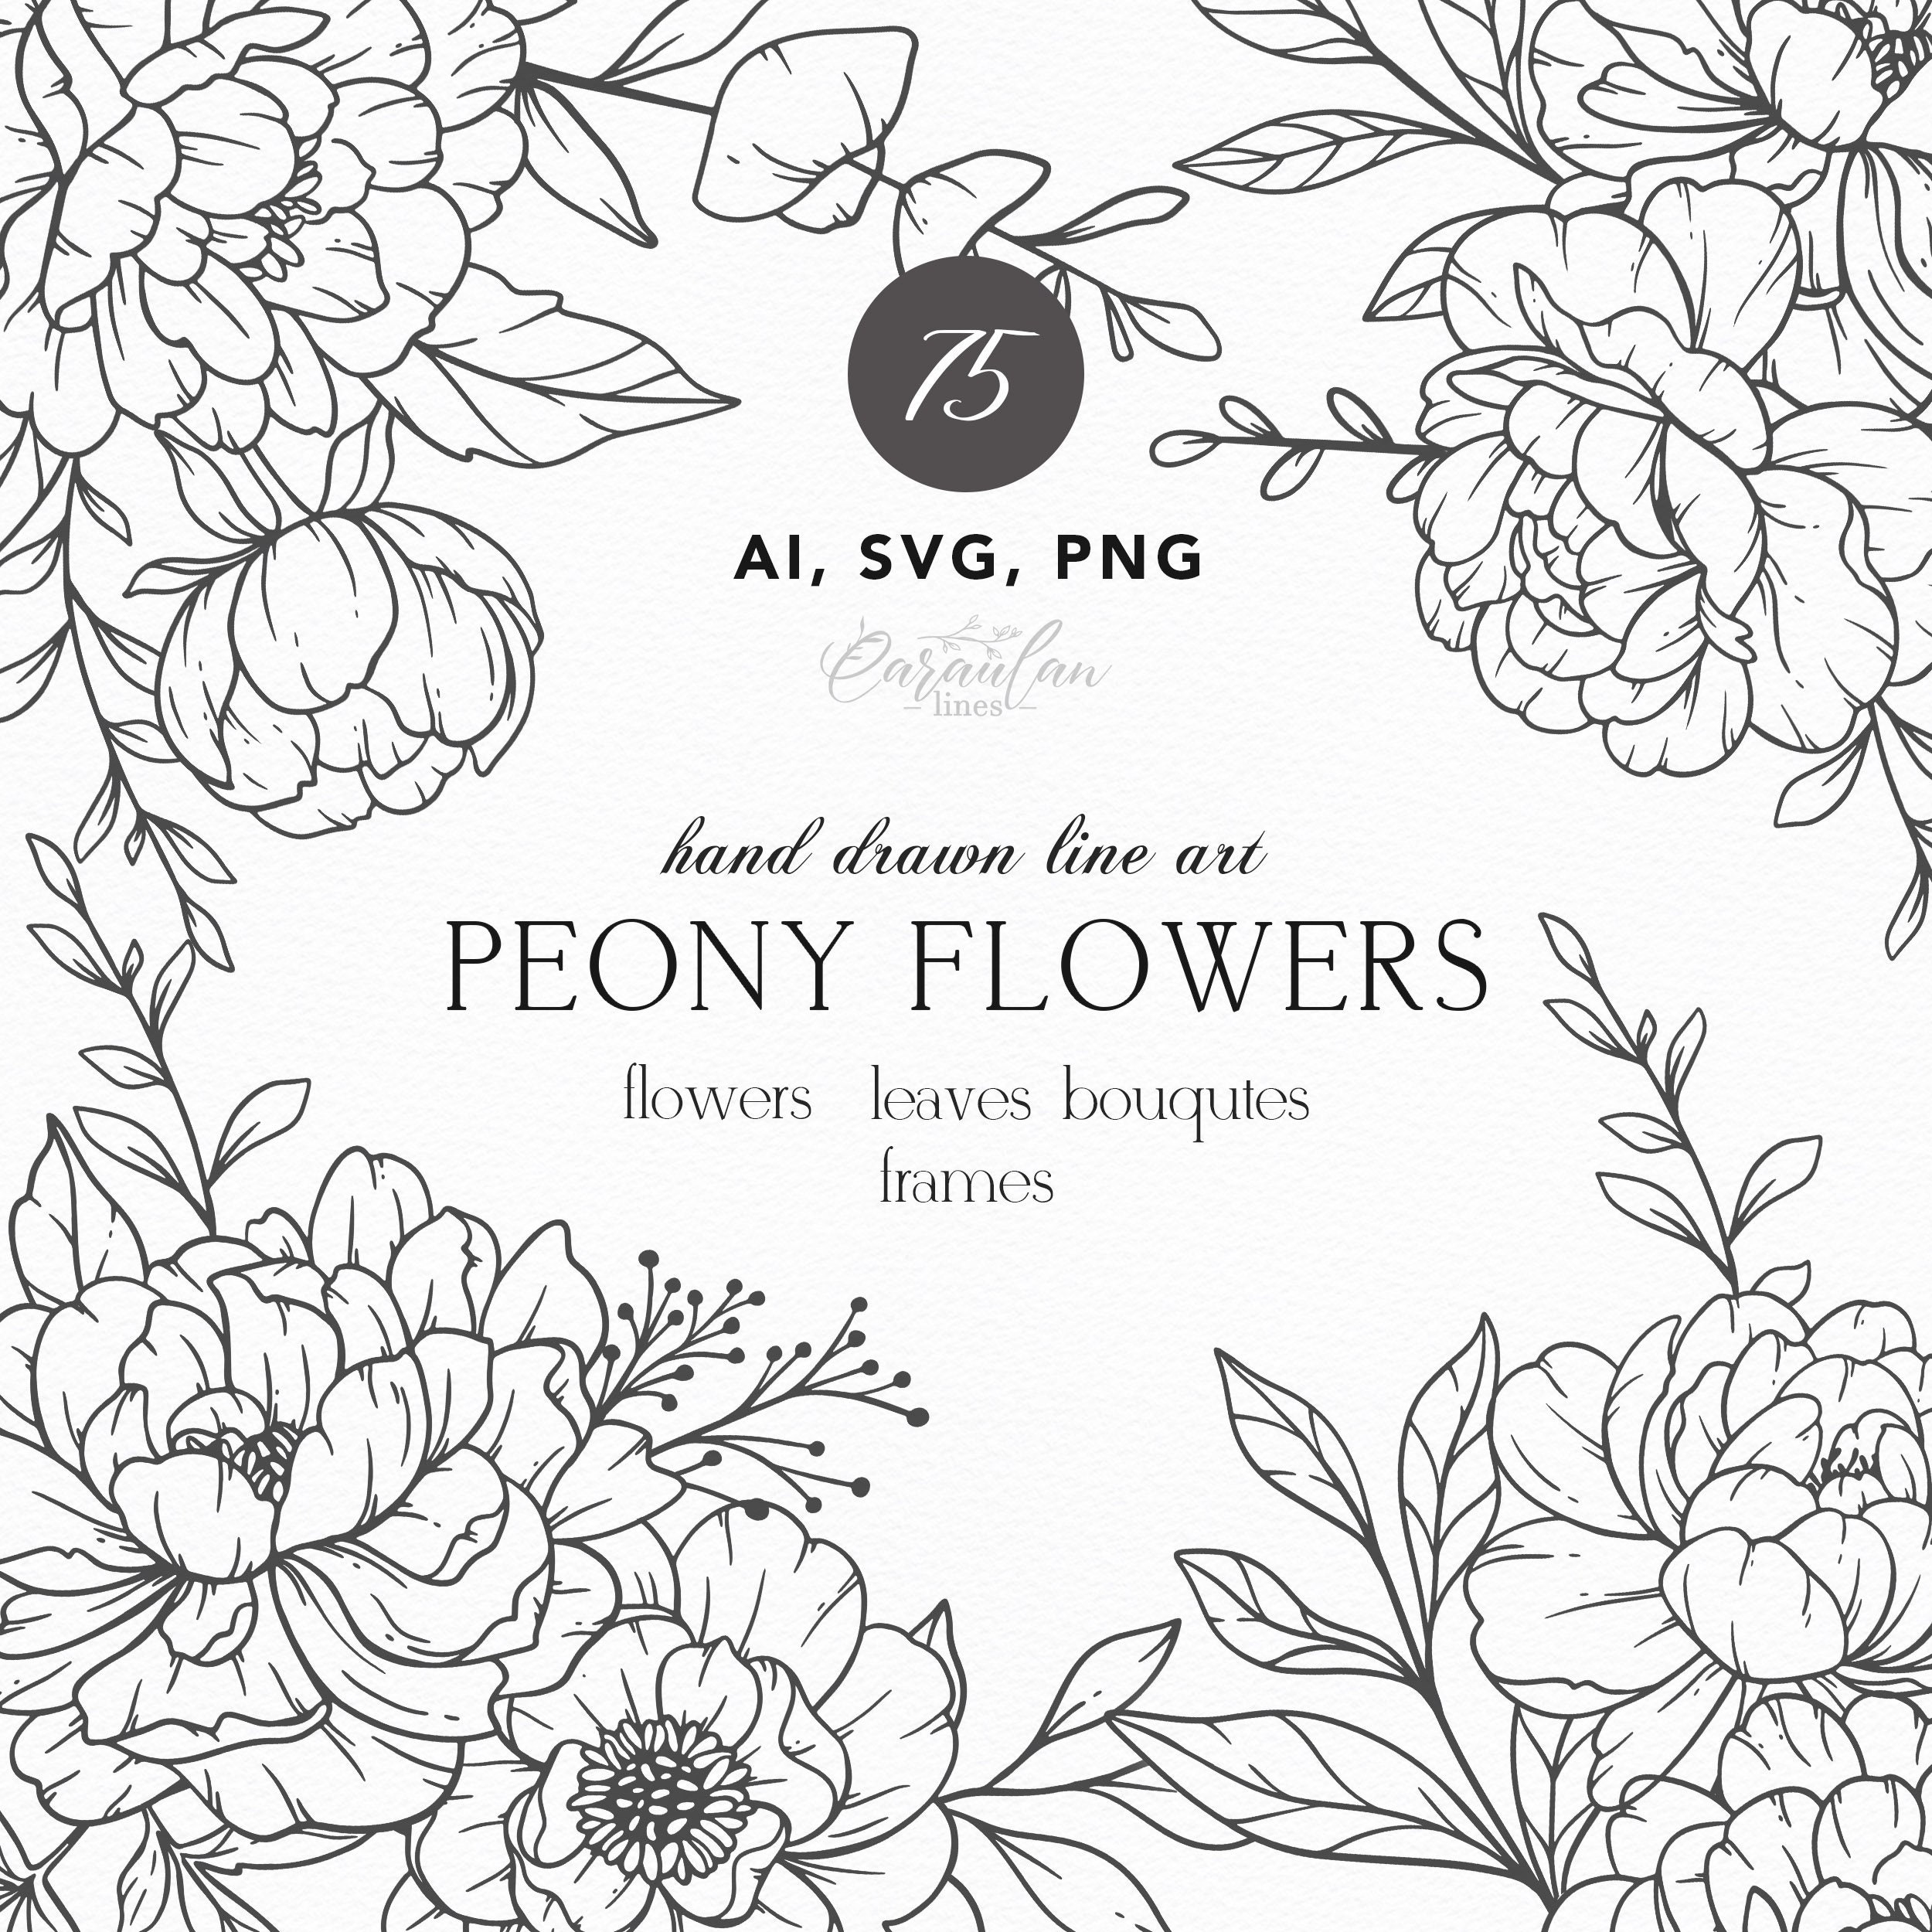 Black and Silver Glam Rose Clip Art, Digital Instant Download Flower Png  Embellishments, Gothic Glitter Roses 